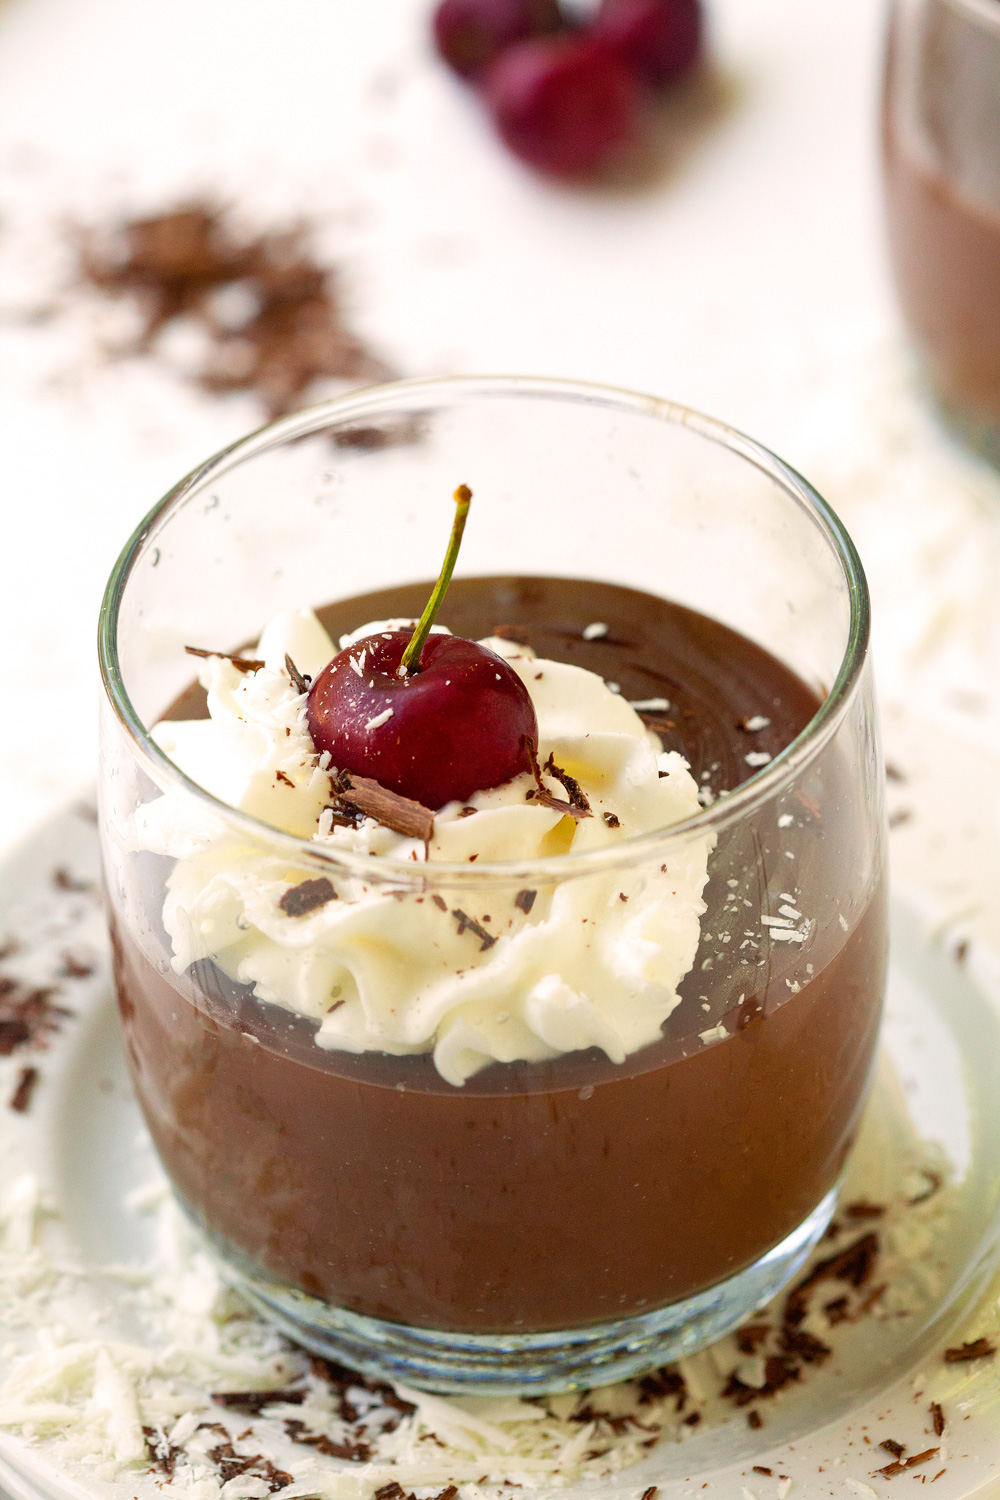 Perfect Chocolate Pudding